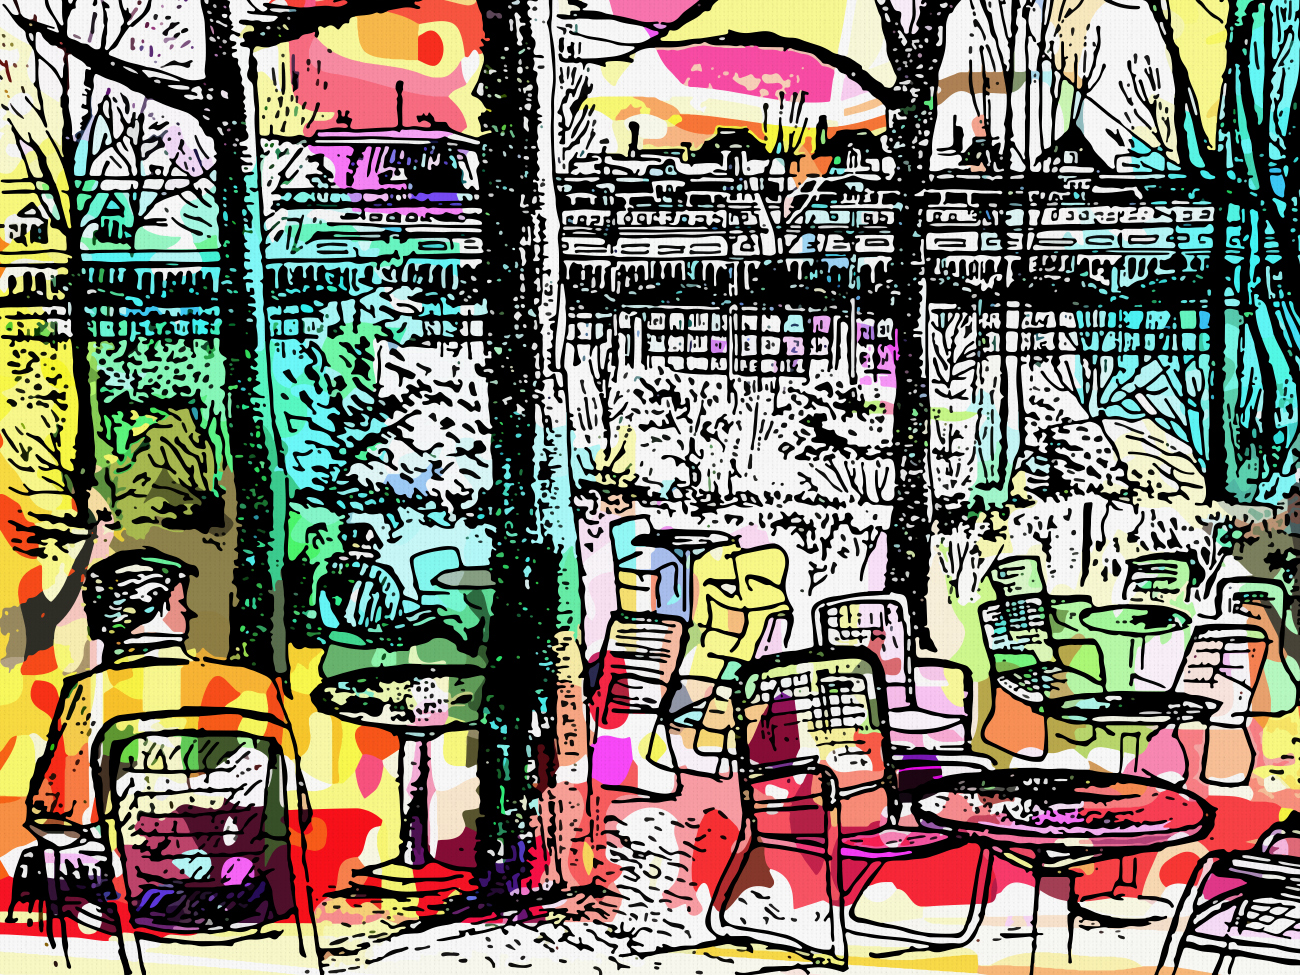 Terrace moments - Artwork of amsterdamoncanvas.com